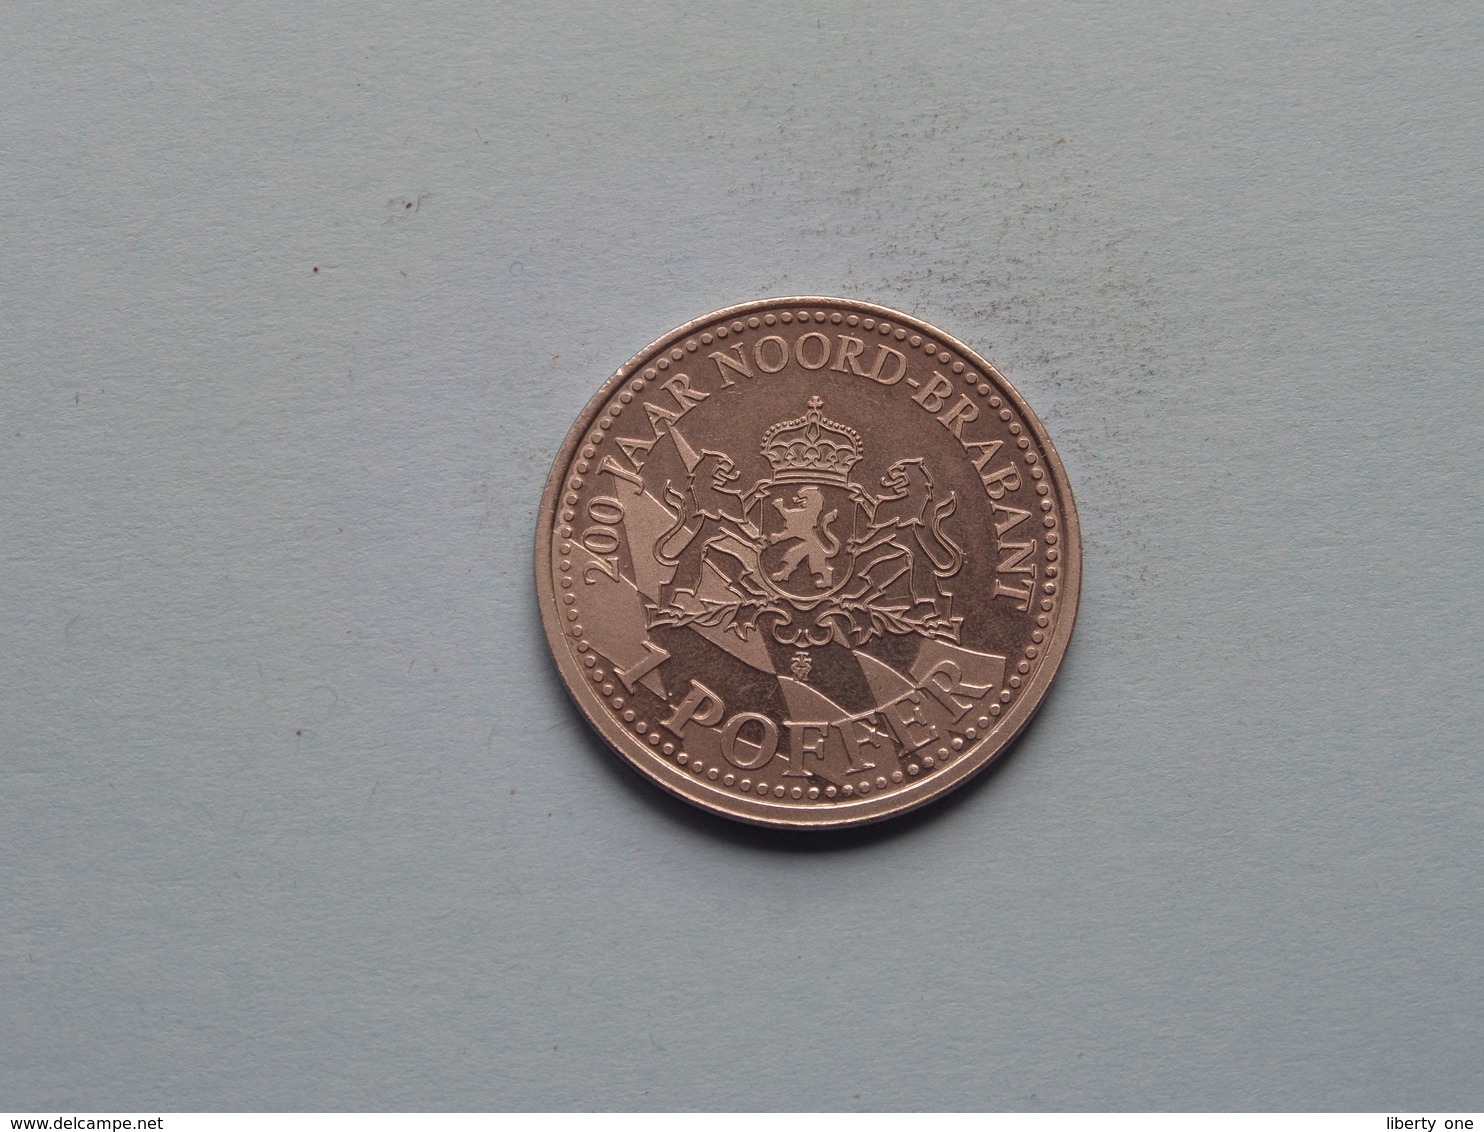 1 POFFER > 200 Jaar NOORD BRABANT ( 30 Mm. - 9.3 Gr. ) > ( Uncleaned Coin / For Grade, Please See Photo ) ! - Souvenirmunten (elongated Coins)